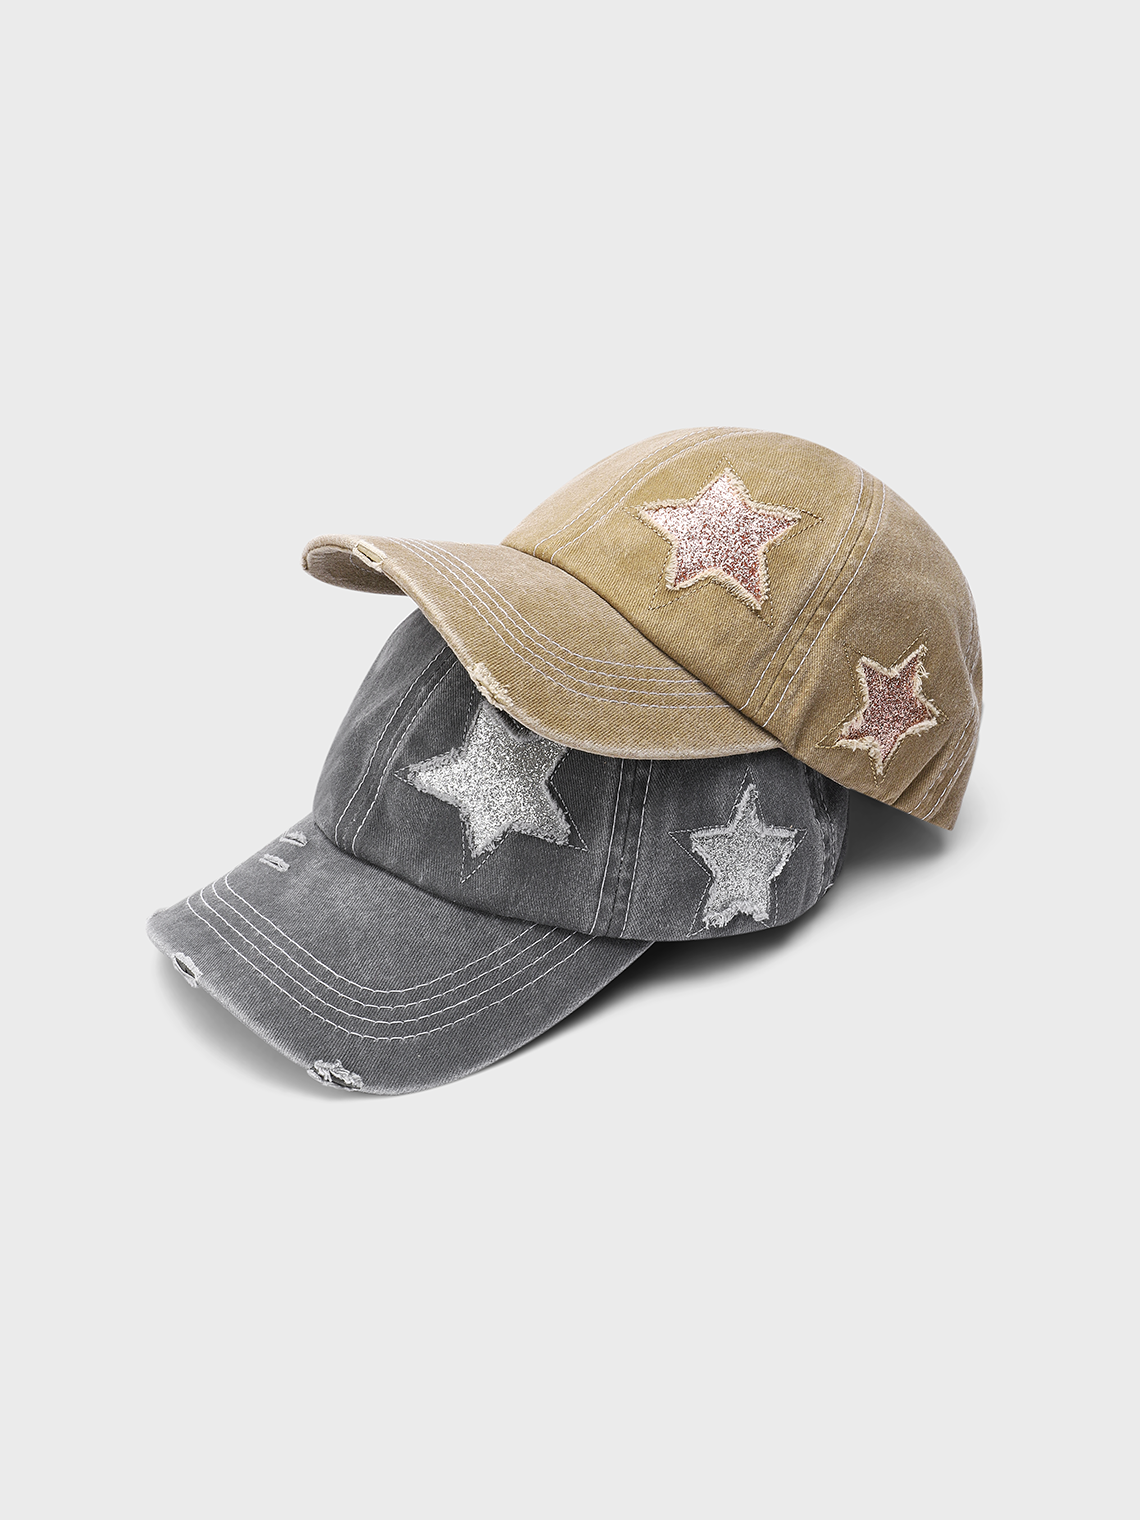 Baseball Star Hat